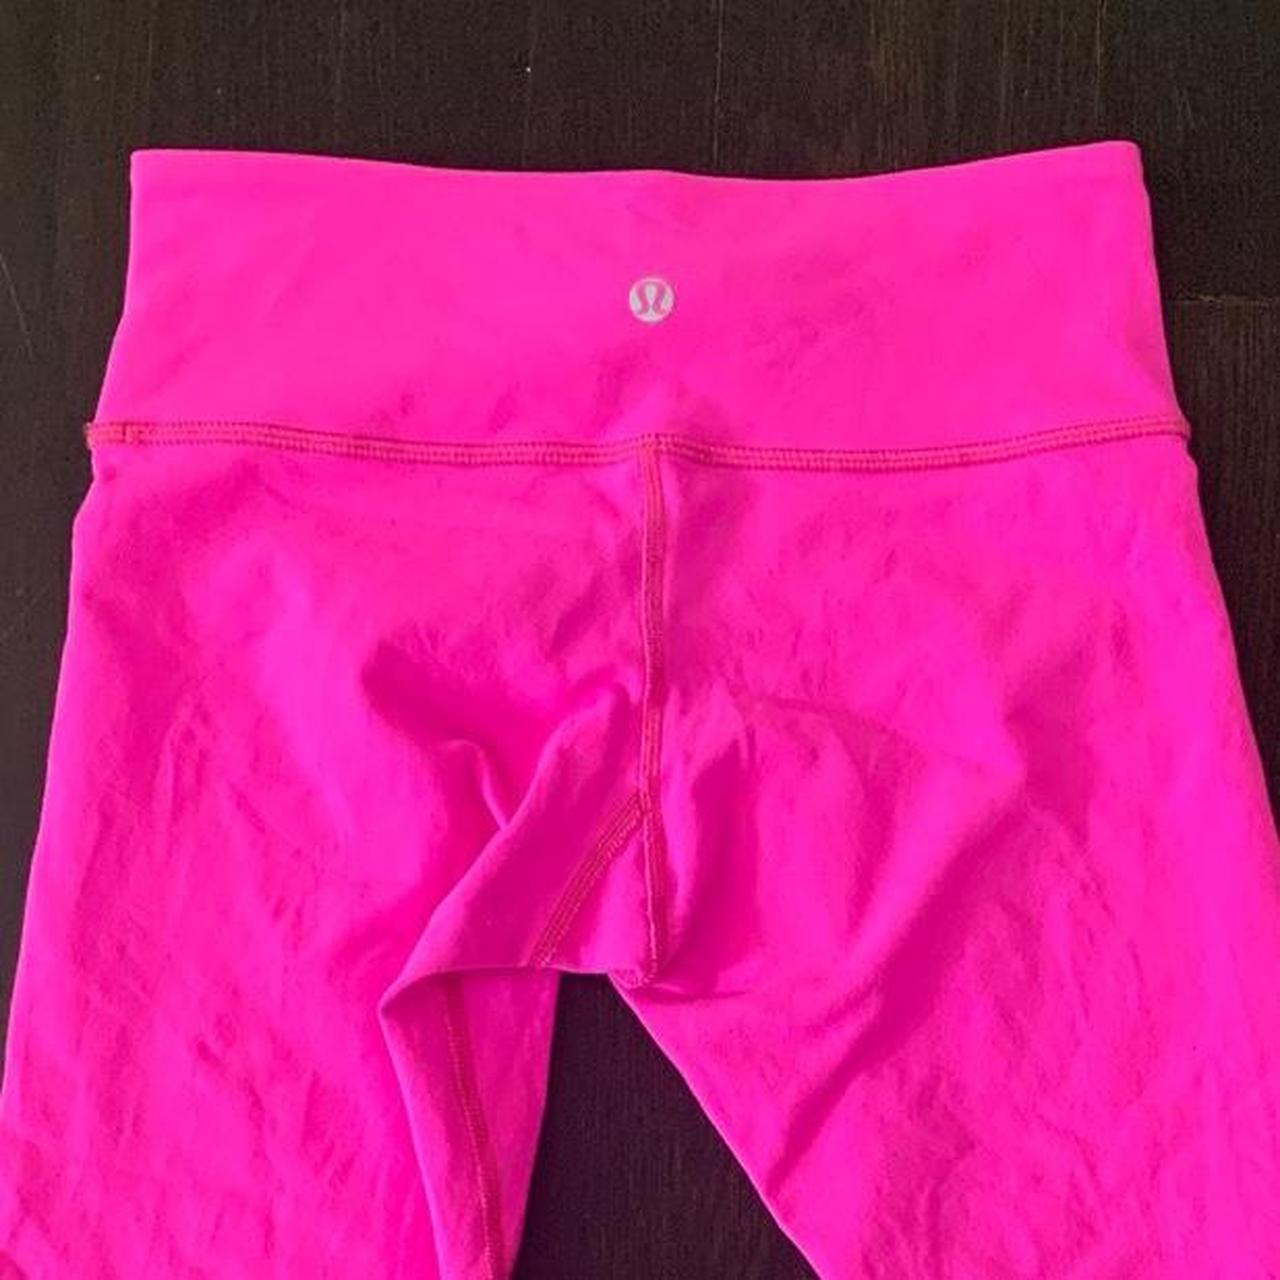 Pink Lululemon leggings +size 4 +fun bright... - Depop